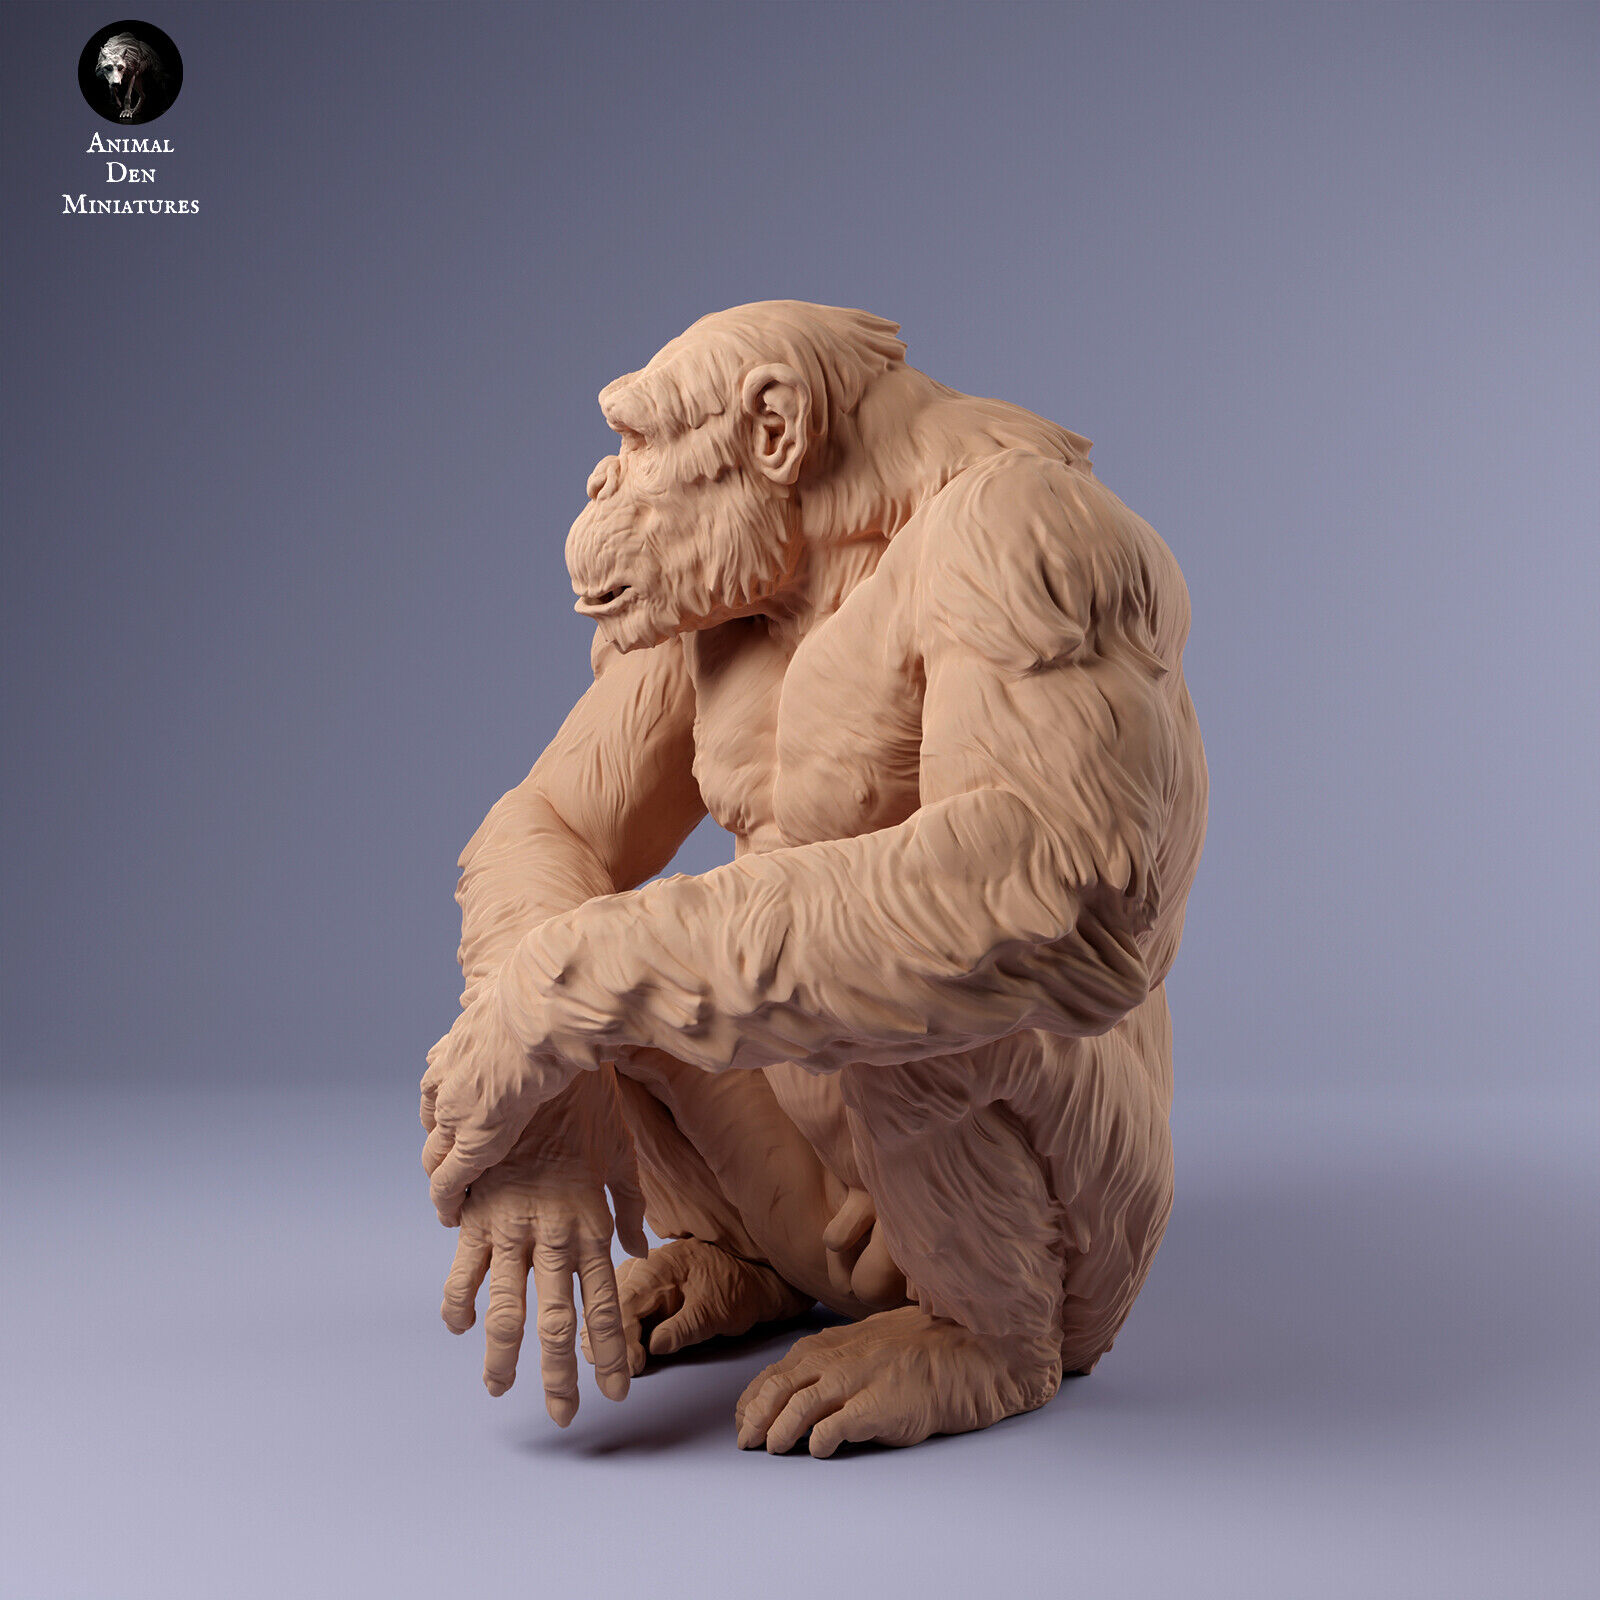 Breyer size artist resin companion animal figurine male chimpanzee sitting